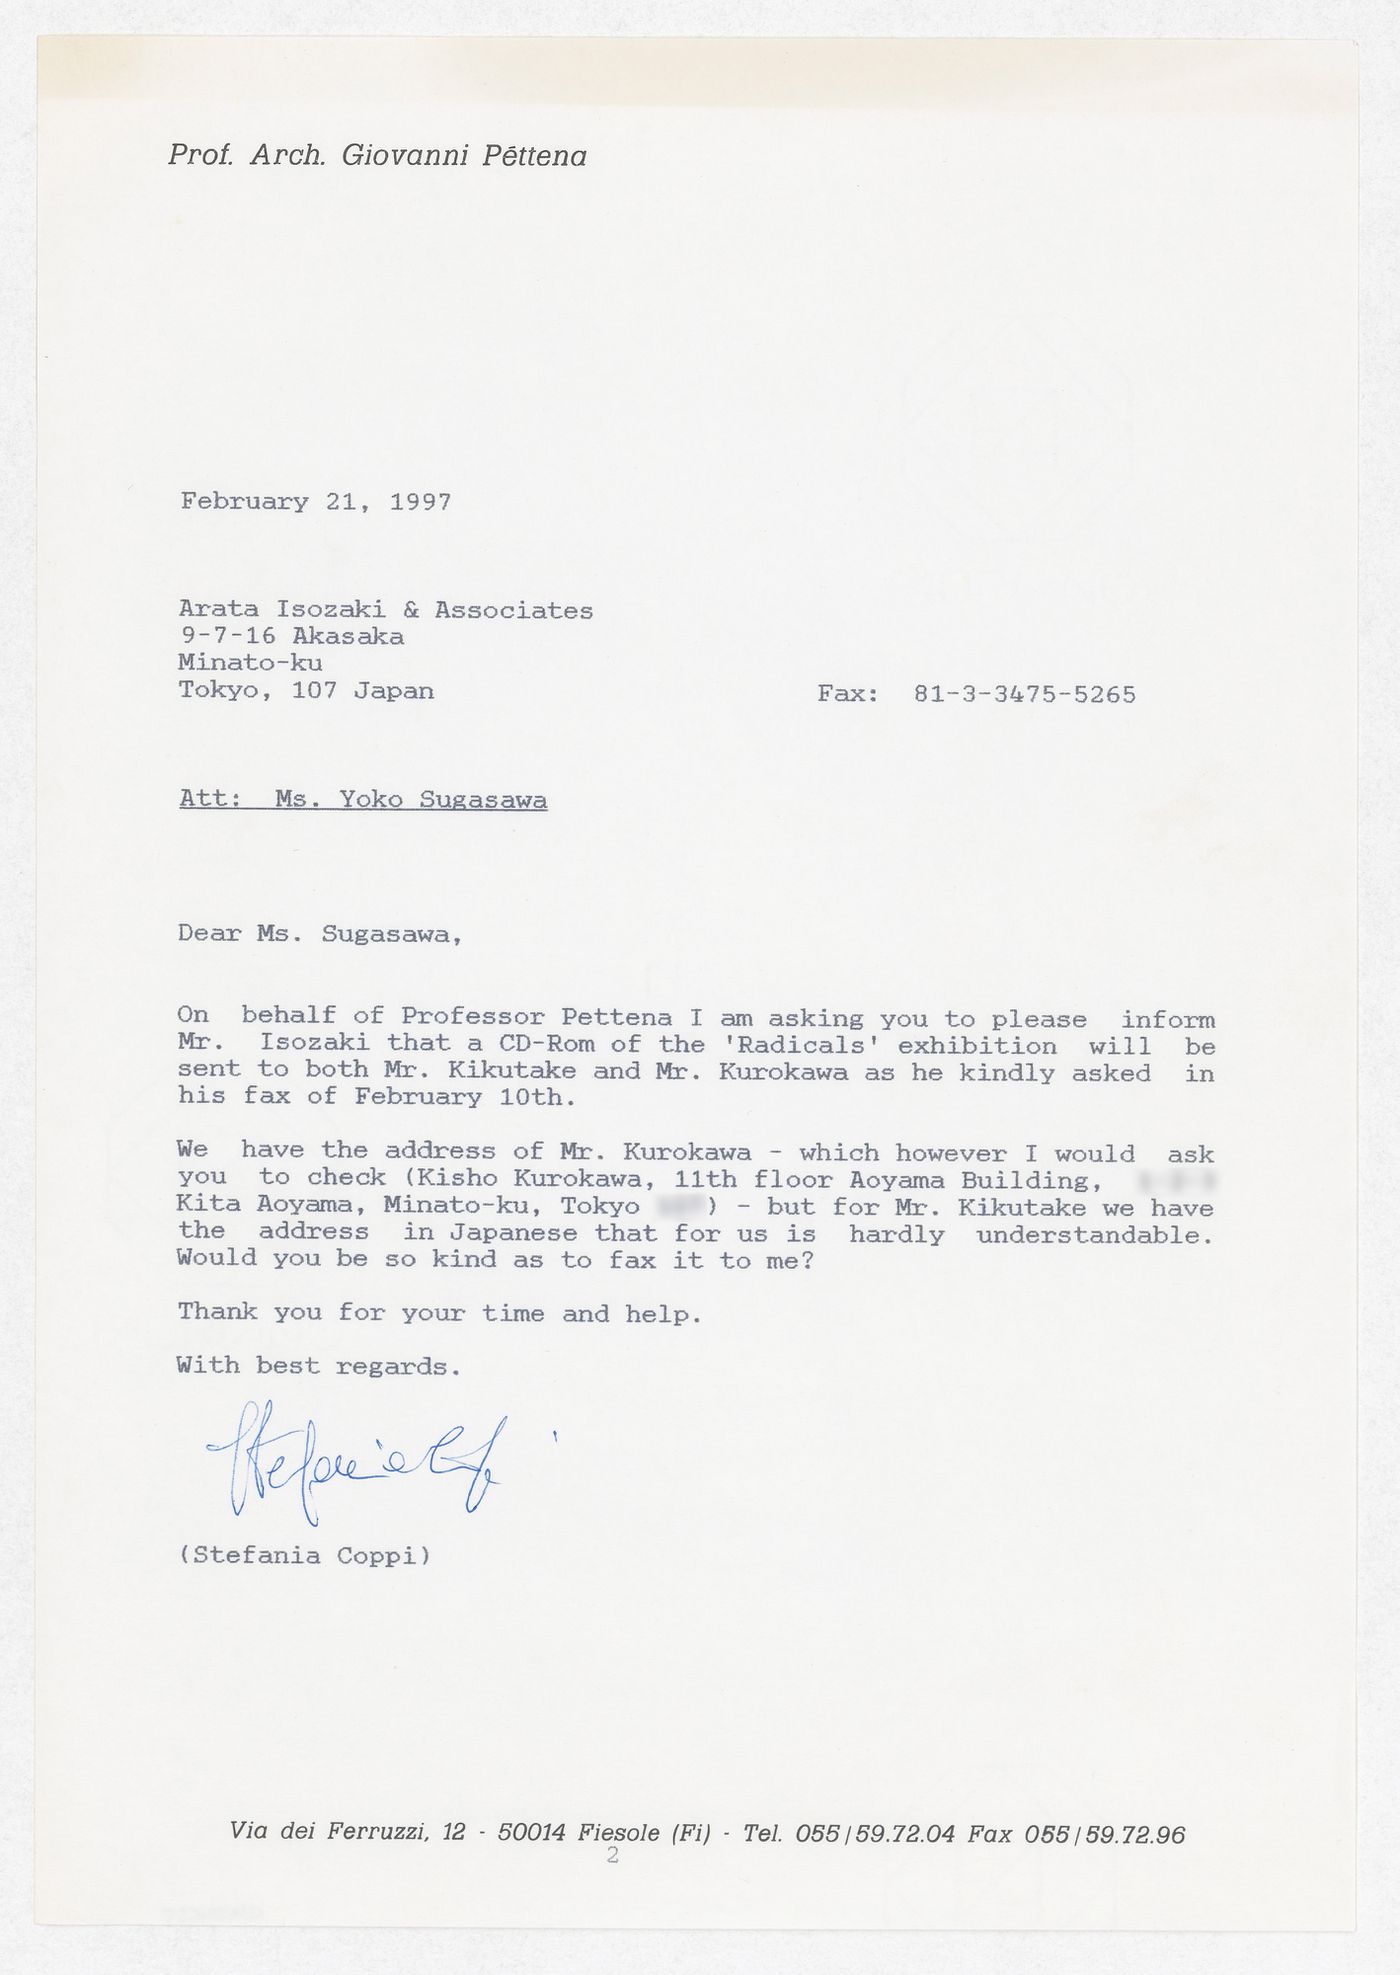 Correspondence with Yoko Sugasawa of Arata Isozaki & Associates regarding Radicals. Architecttura e Design 1960-1975 exhibition materials